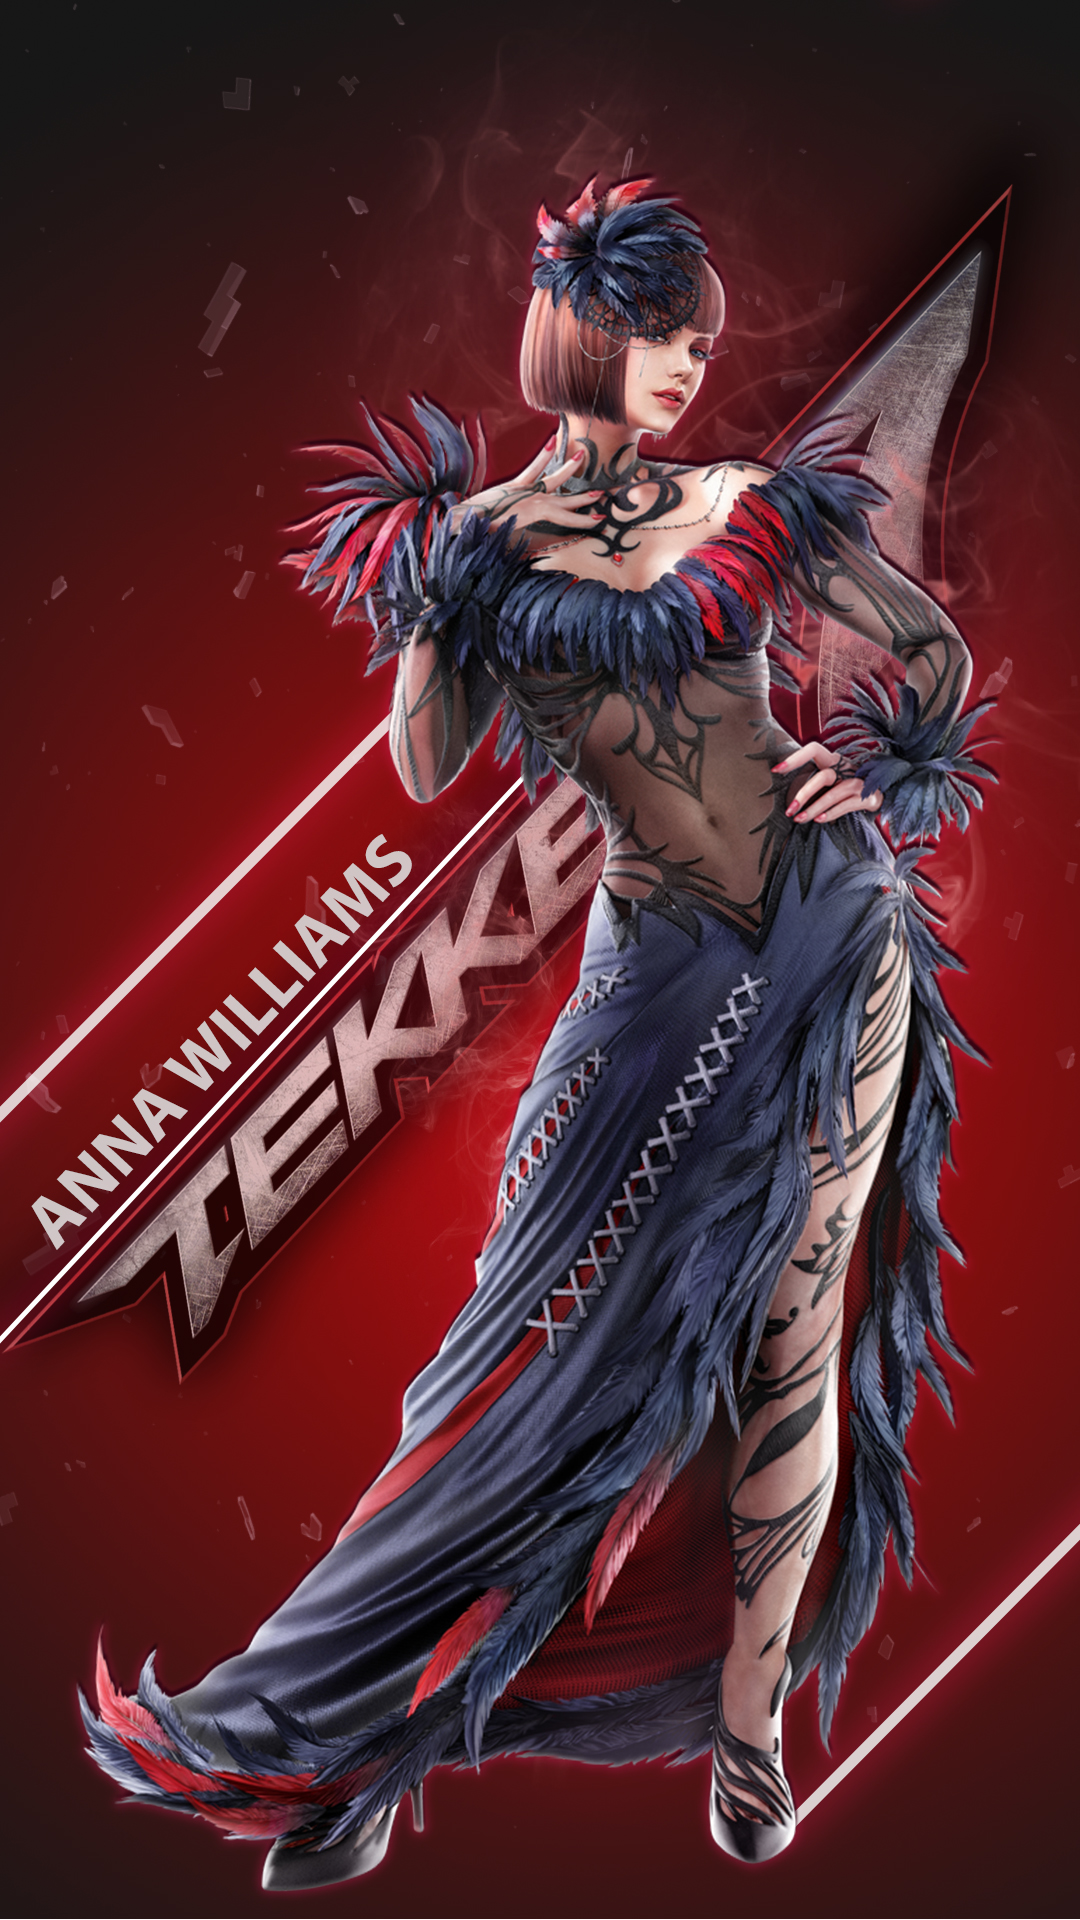 Tekken 7 Phone Wallpaper - Anna williams by CR1